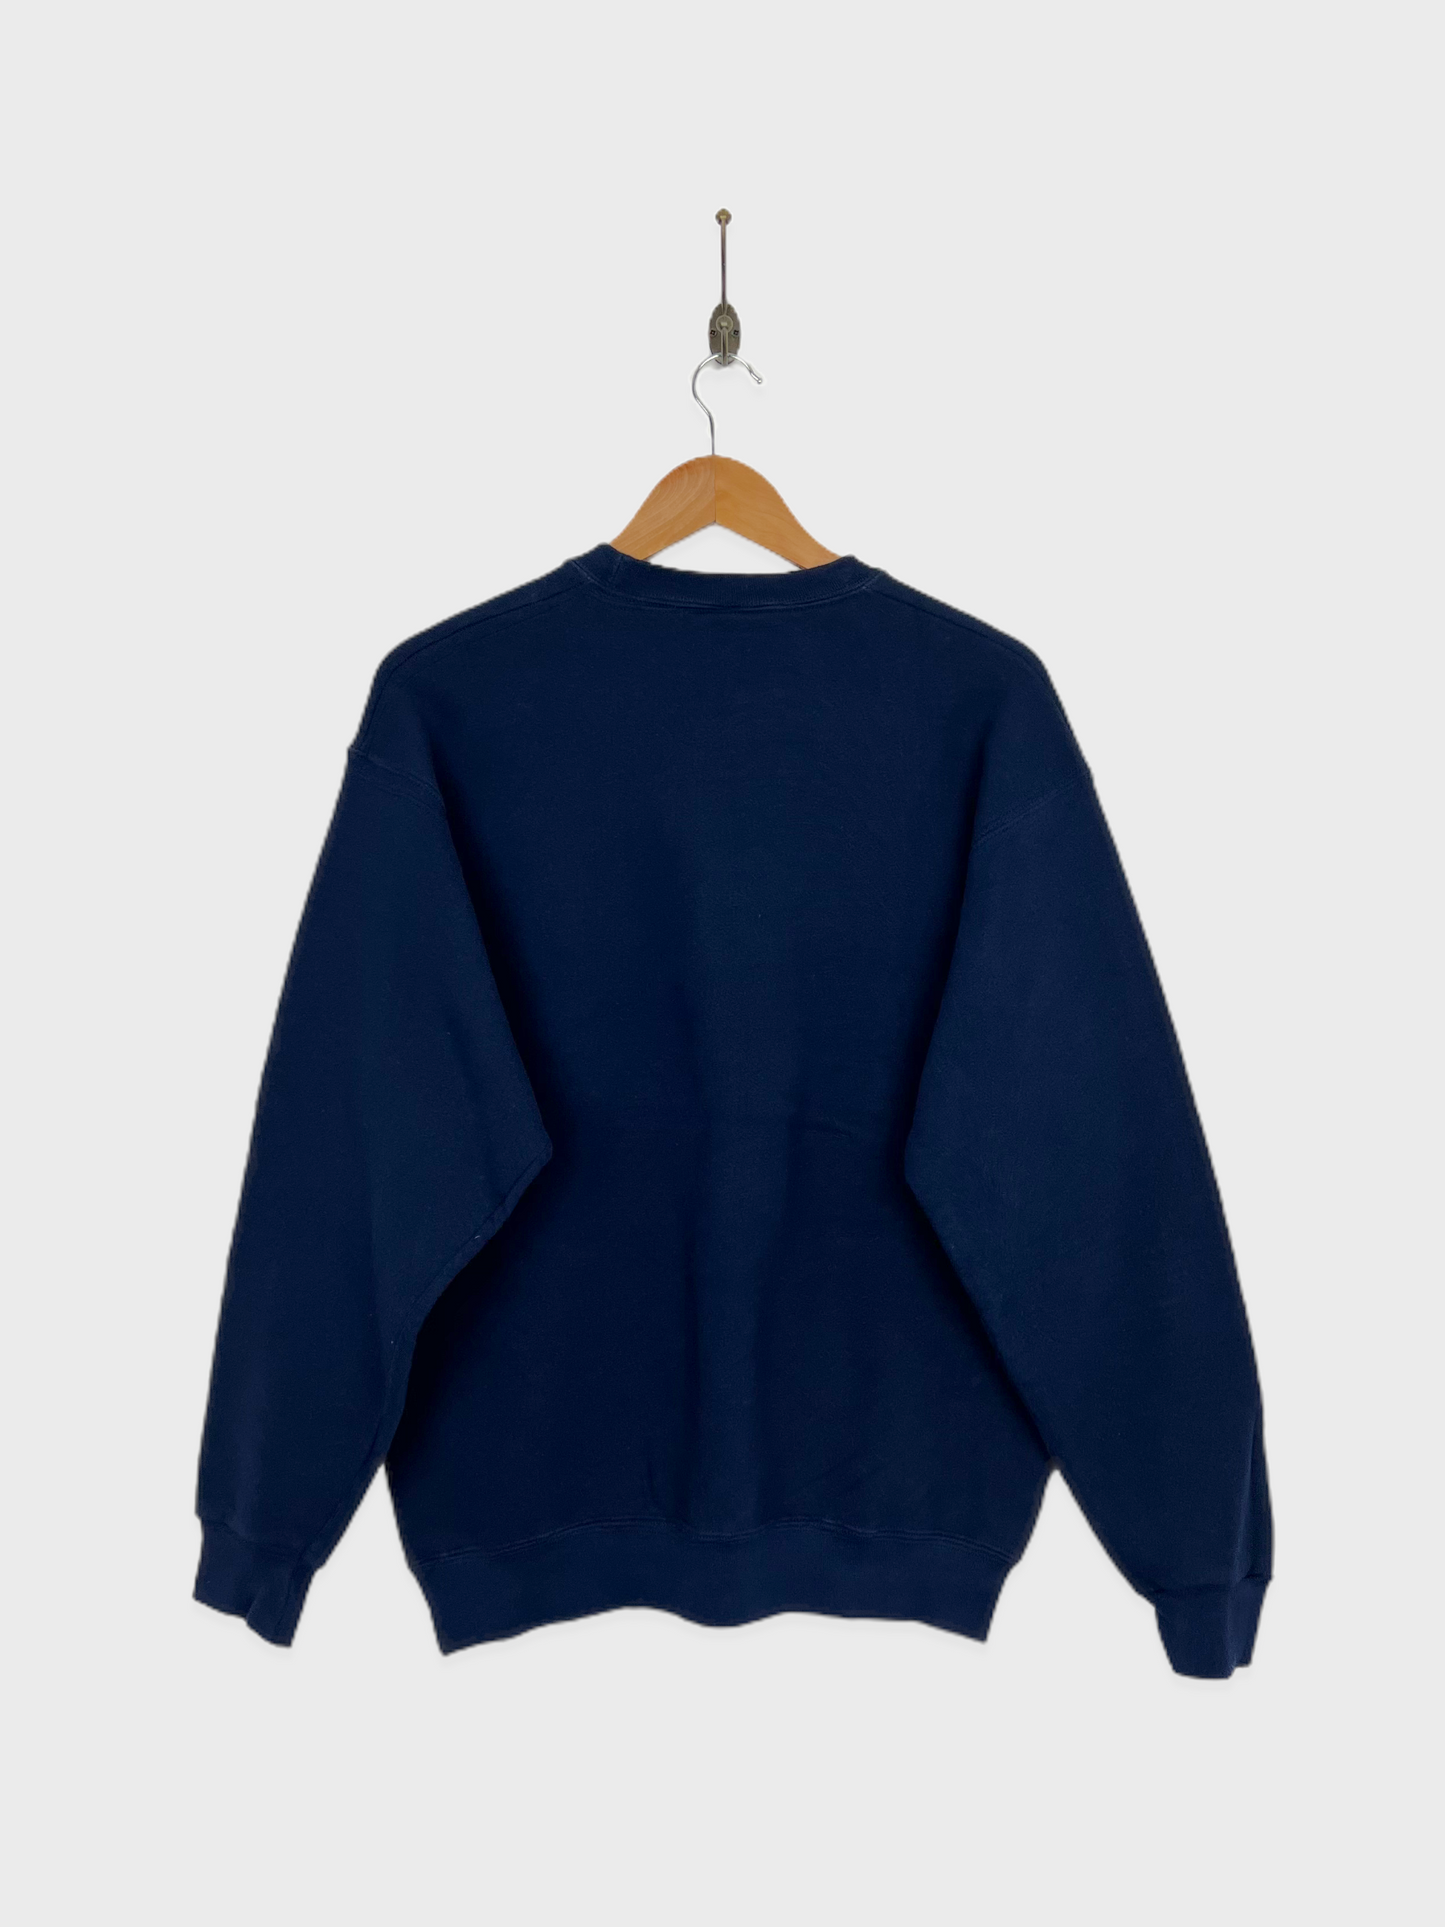 90's Lasalle Police Embroidered Vintage Sweatshirt Size 10